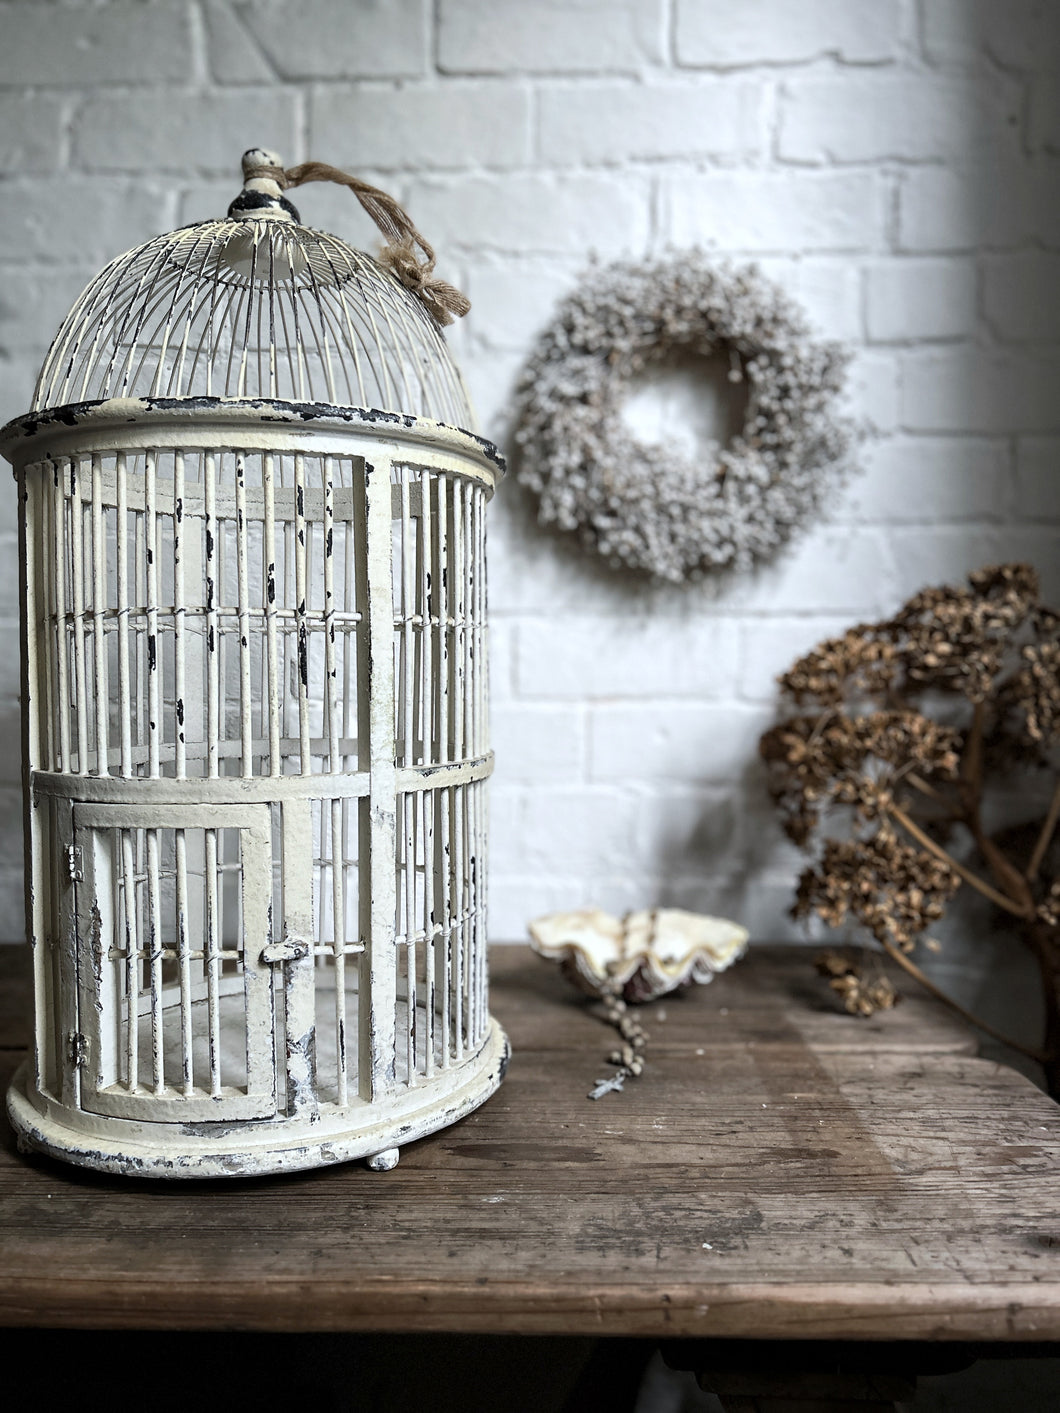 A white Decorative Vintage style bird cage